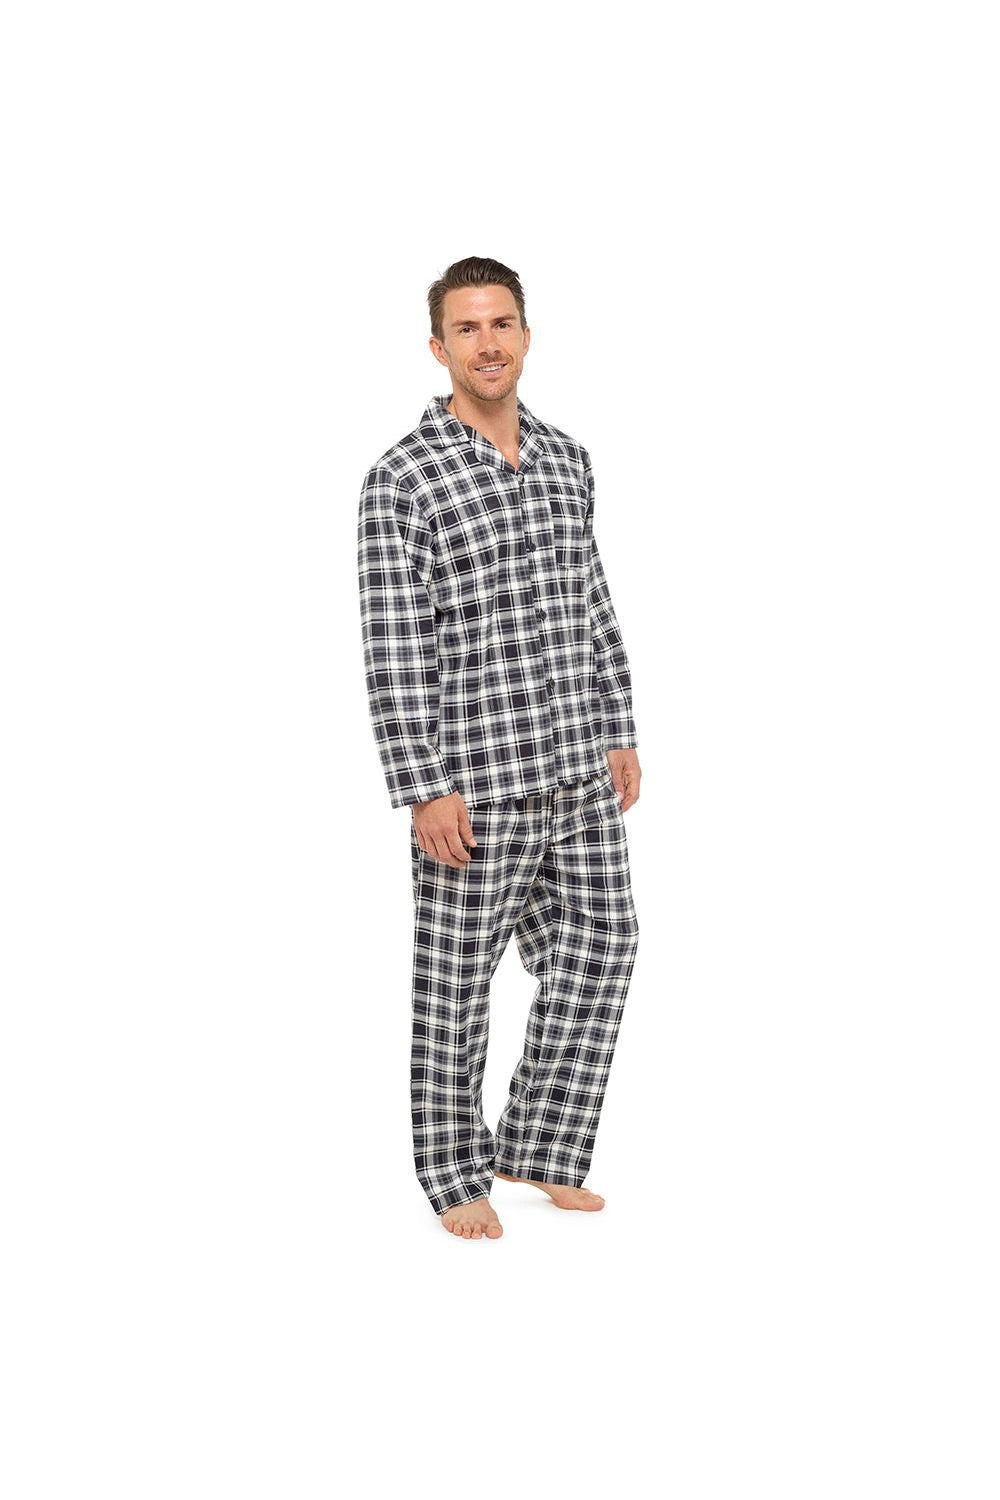 Mens Brushed Warm Flannel 100% Cotton Check Pyjamas Medium - Pyjamas.com